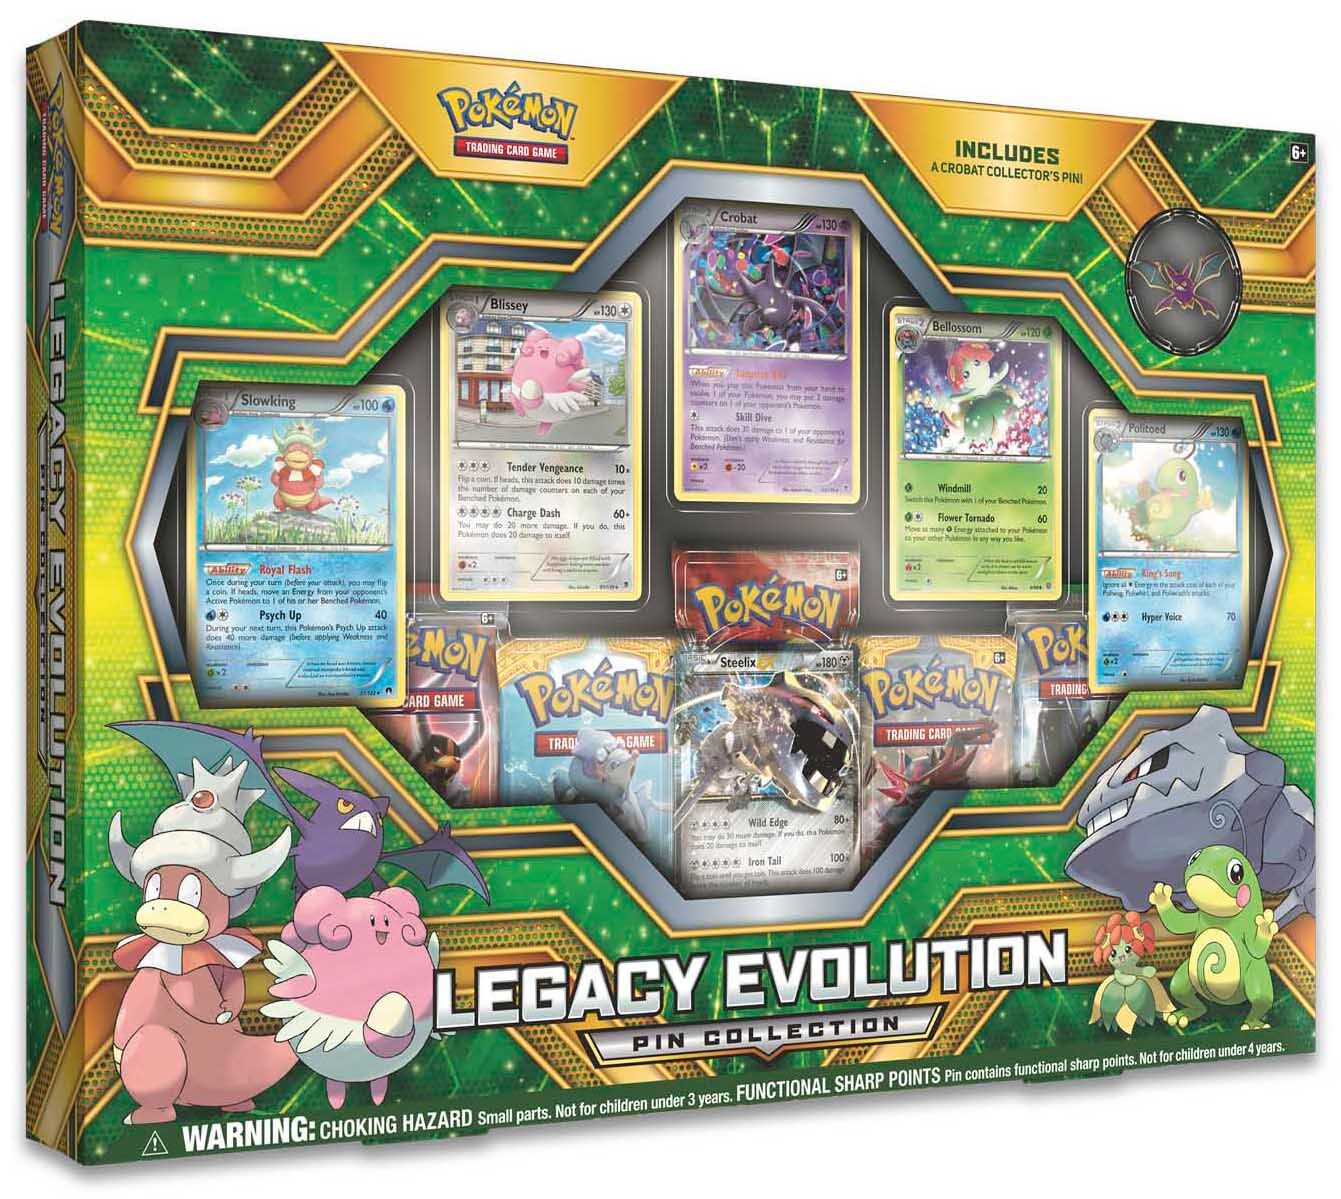 Pokémon Legacy Evolution Pin Collection Box